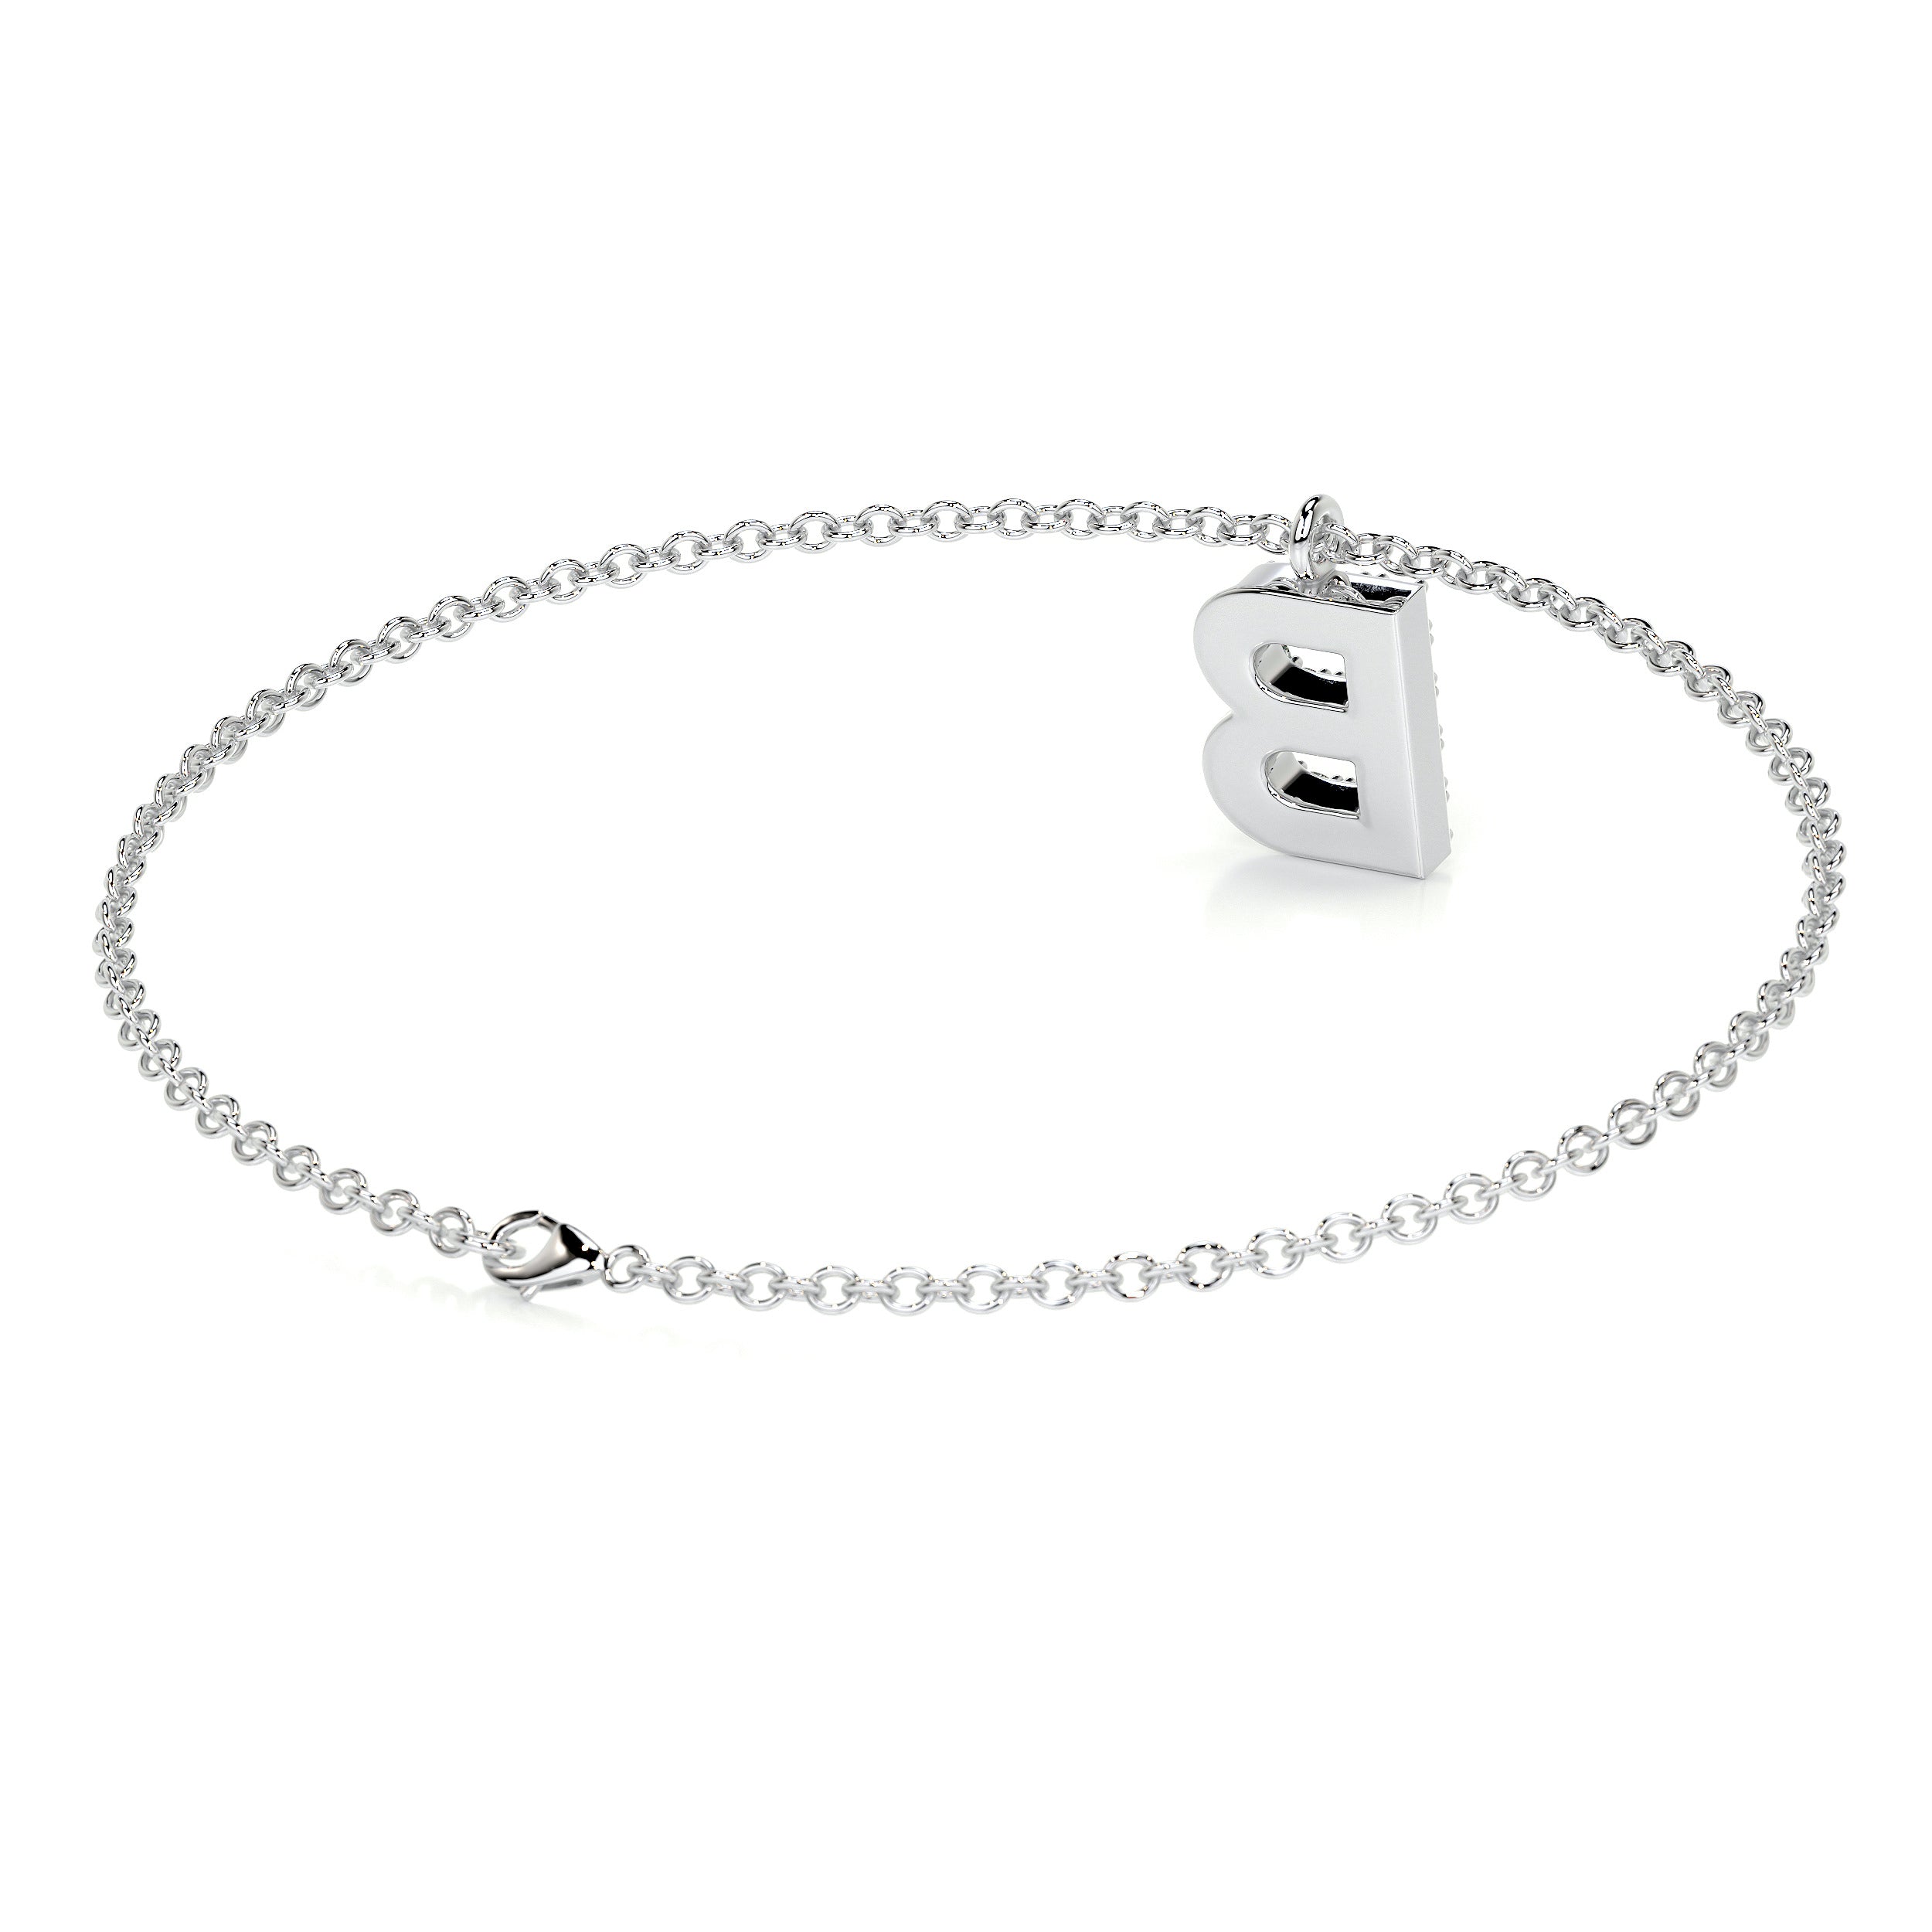 Barbara Letter Diamonds Bracelet   (0.15 Carat) -14K White Gold